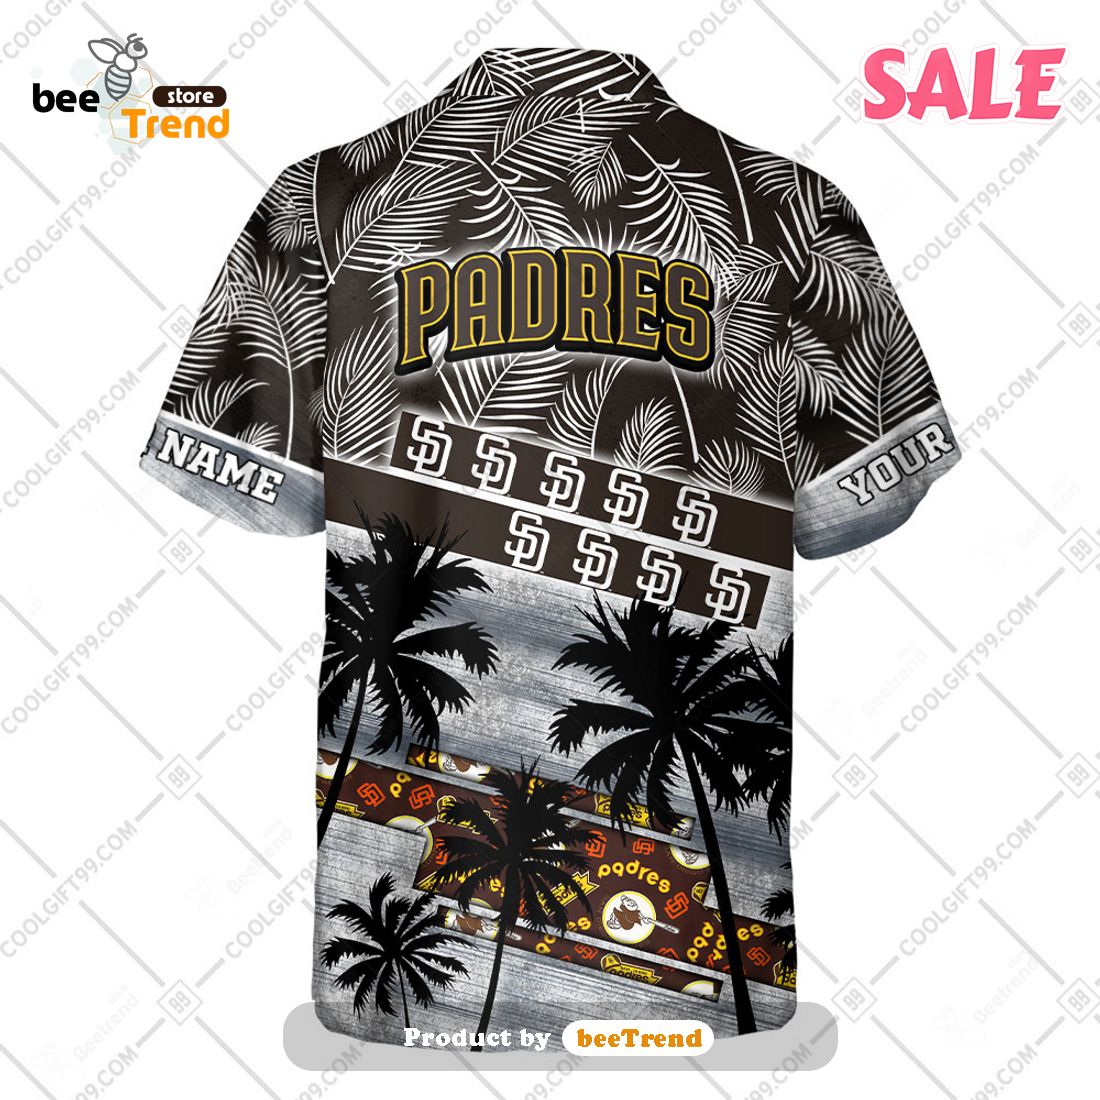 TRENDING] San Diego Padres MLB-Personalized Hawaiian Shirt